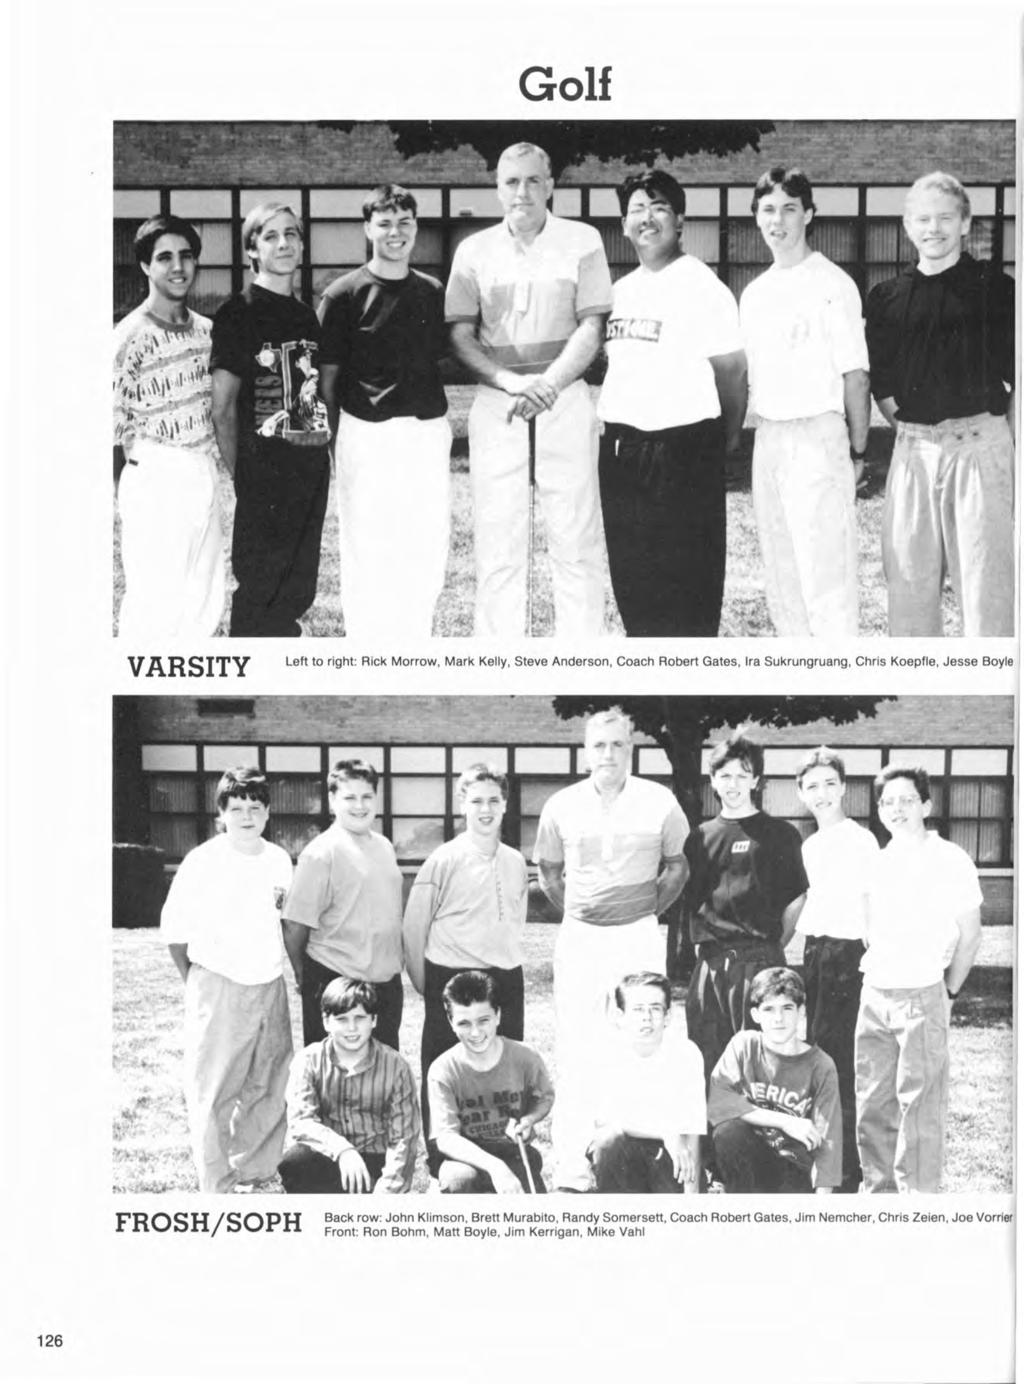 Golf VARSITY Left to right: Rick Morrow, Mark Kelly, Steve Anderson, Coach Robert Gates, Ira Sukrungruang, Chris Koepfle, Jesse Boyle FROSHjSOPH Back row: